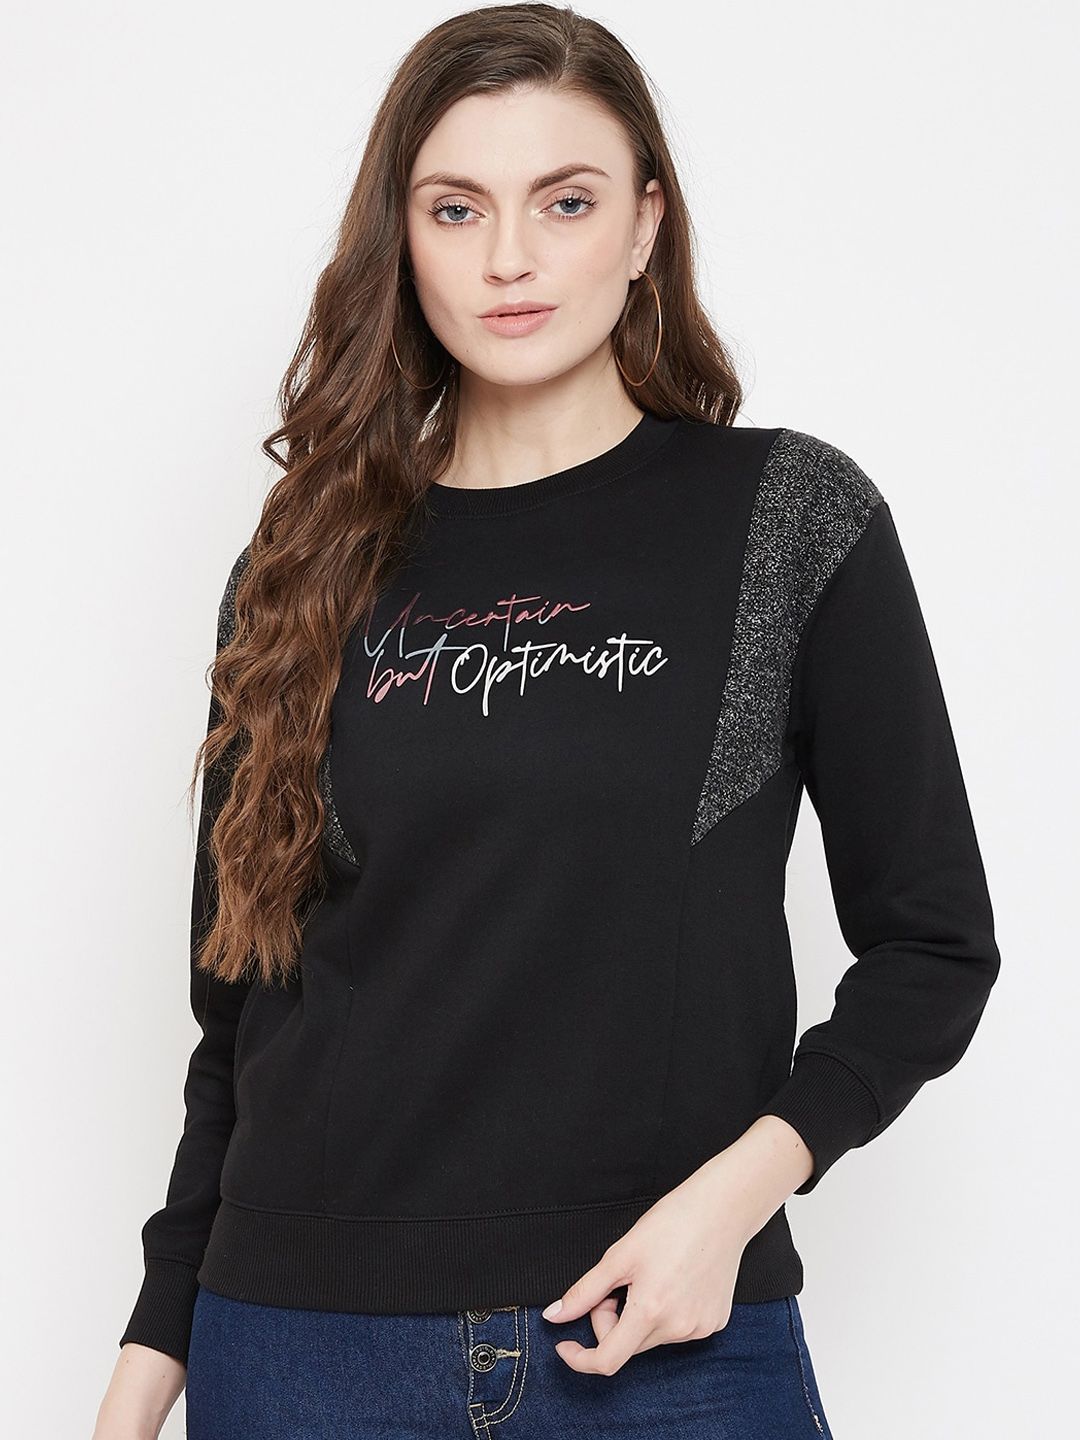 Madame Women Black Typography Printed Sweatshirt Price in India